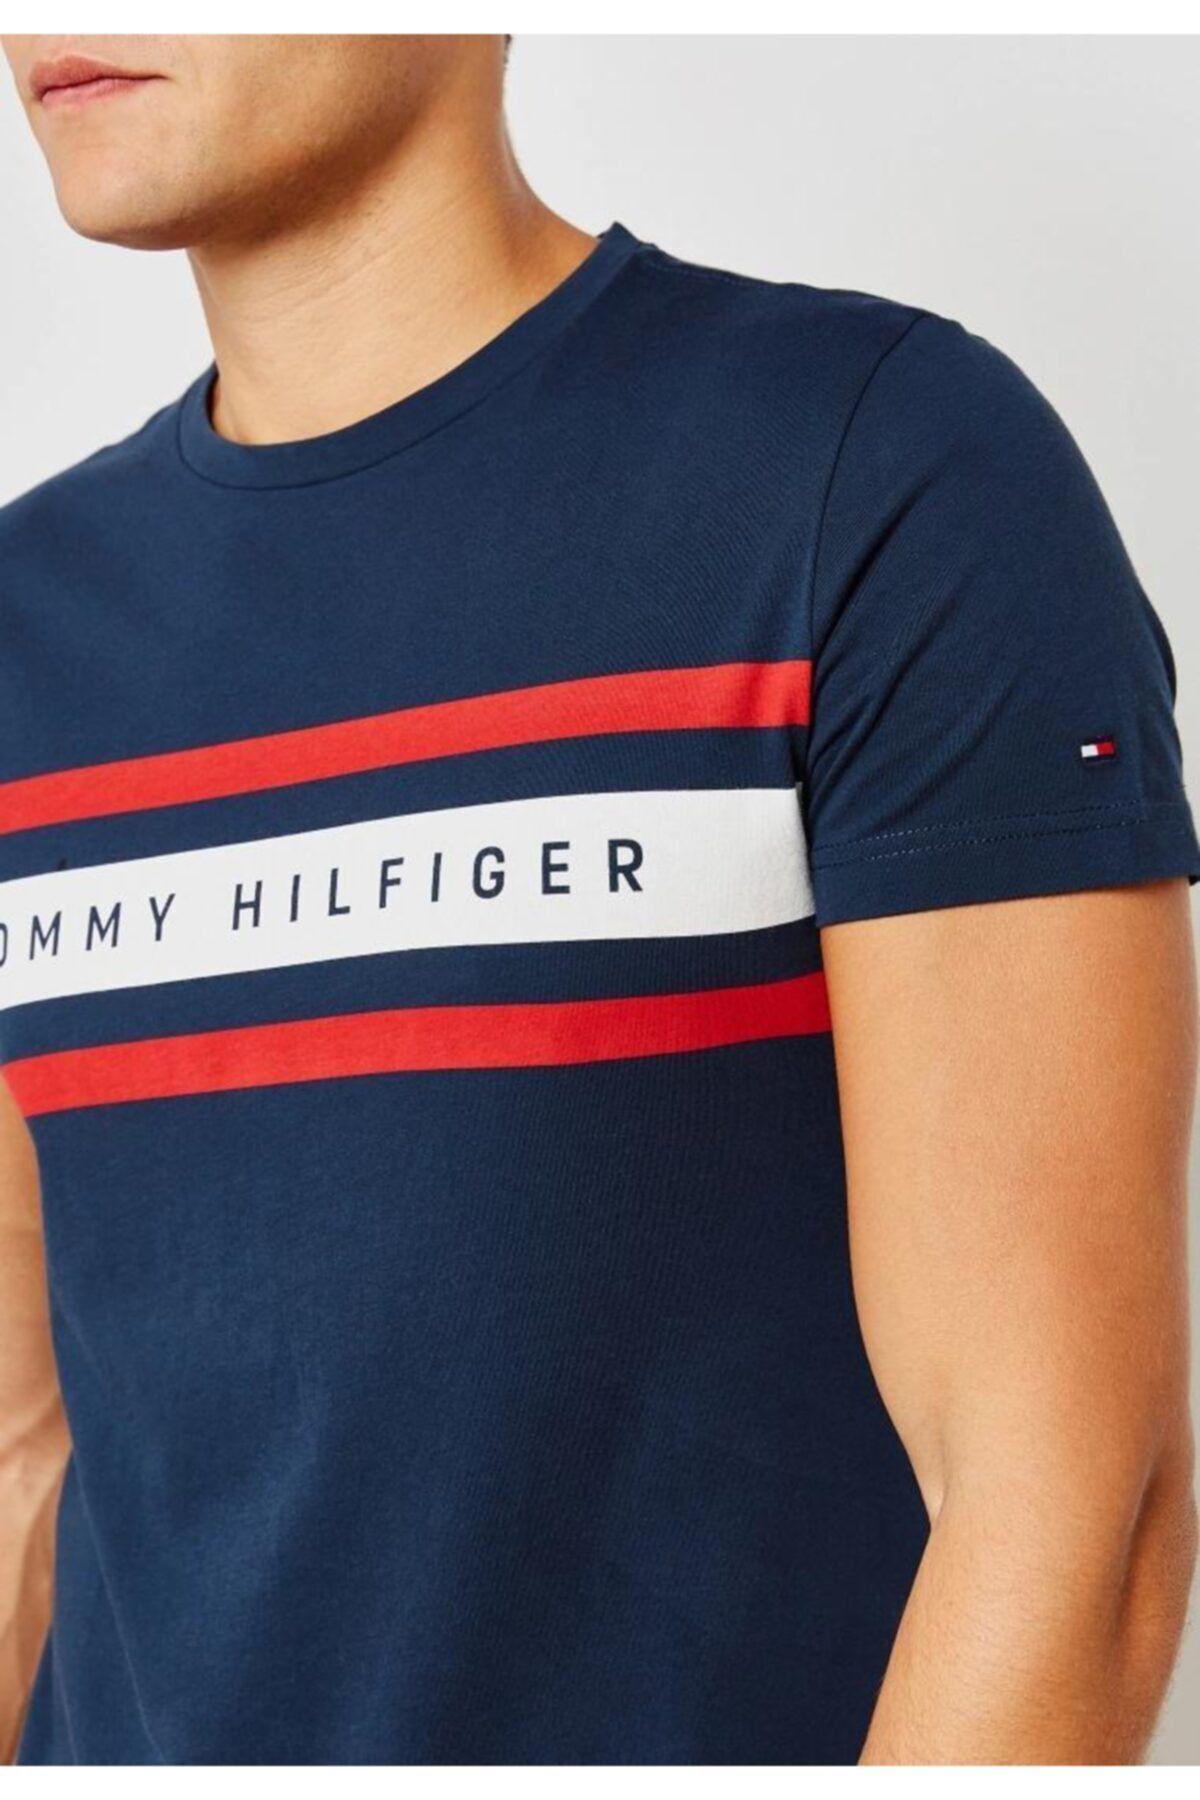 Tommy Hilfiger Signature Print Tshirt Organic Cotton